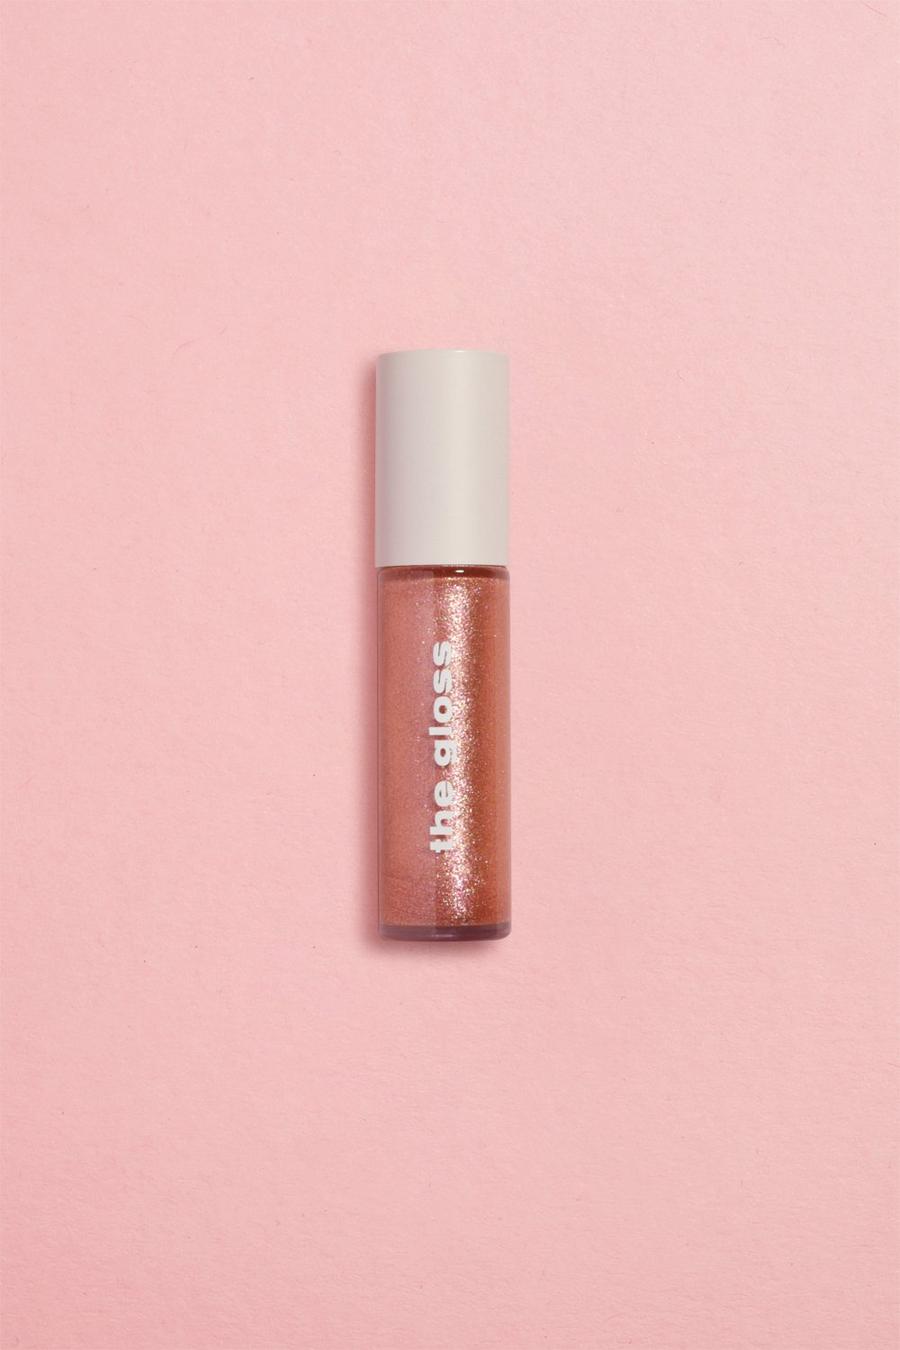 Boohoo Beauty - Le gloss - Rose Shimmer image number 1